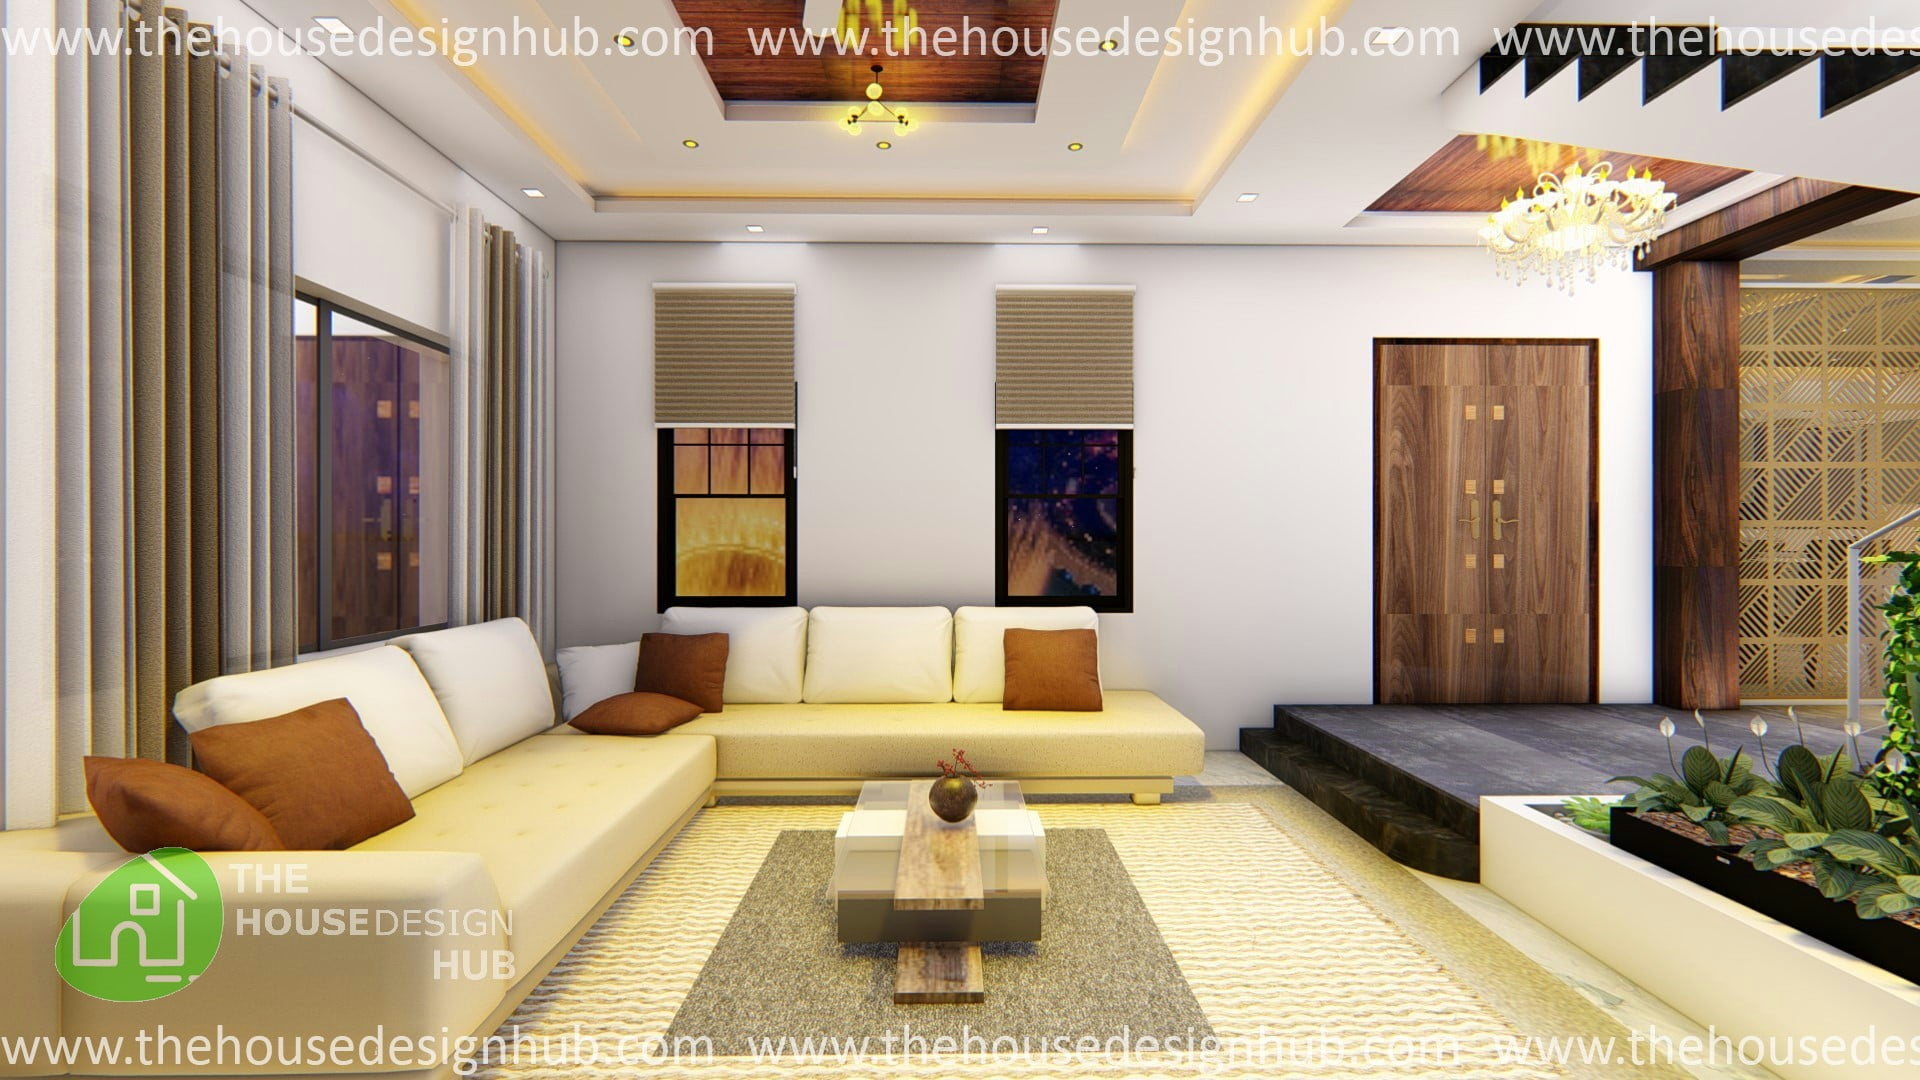 Simple Living Room Interior Design Ideas  The House Design Hub